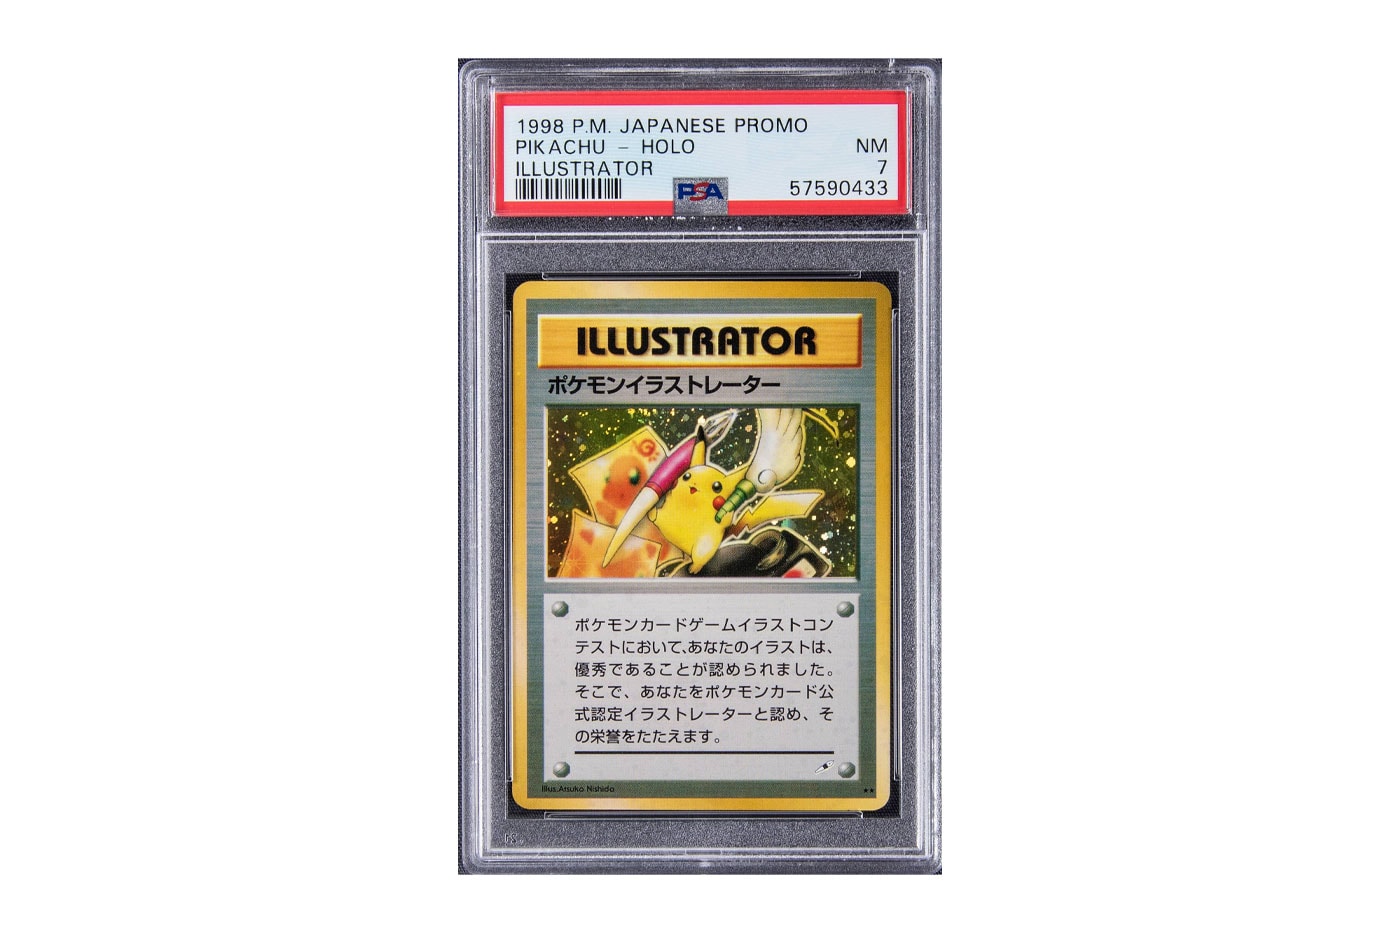 A Mint Condition Rare 1998 Holographic Pikachu Pokémon Card Sold for a Record Breaking $900,000 USD goldin auctions pokemon trading cards pokemon tcg illustrator pikachu pokemon